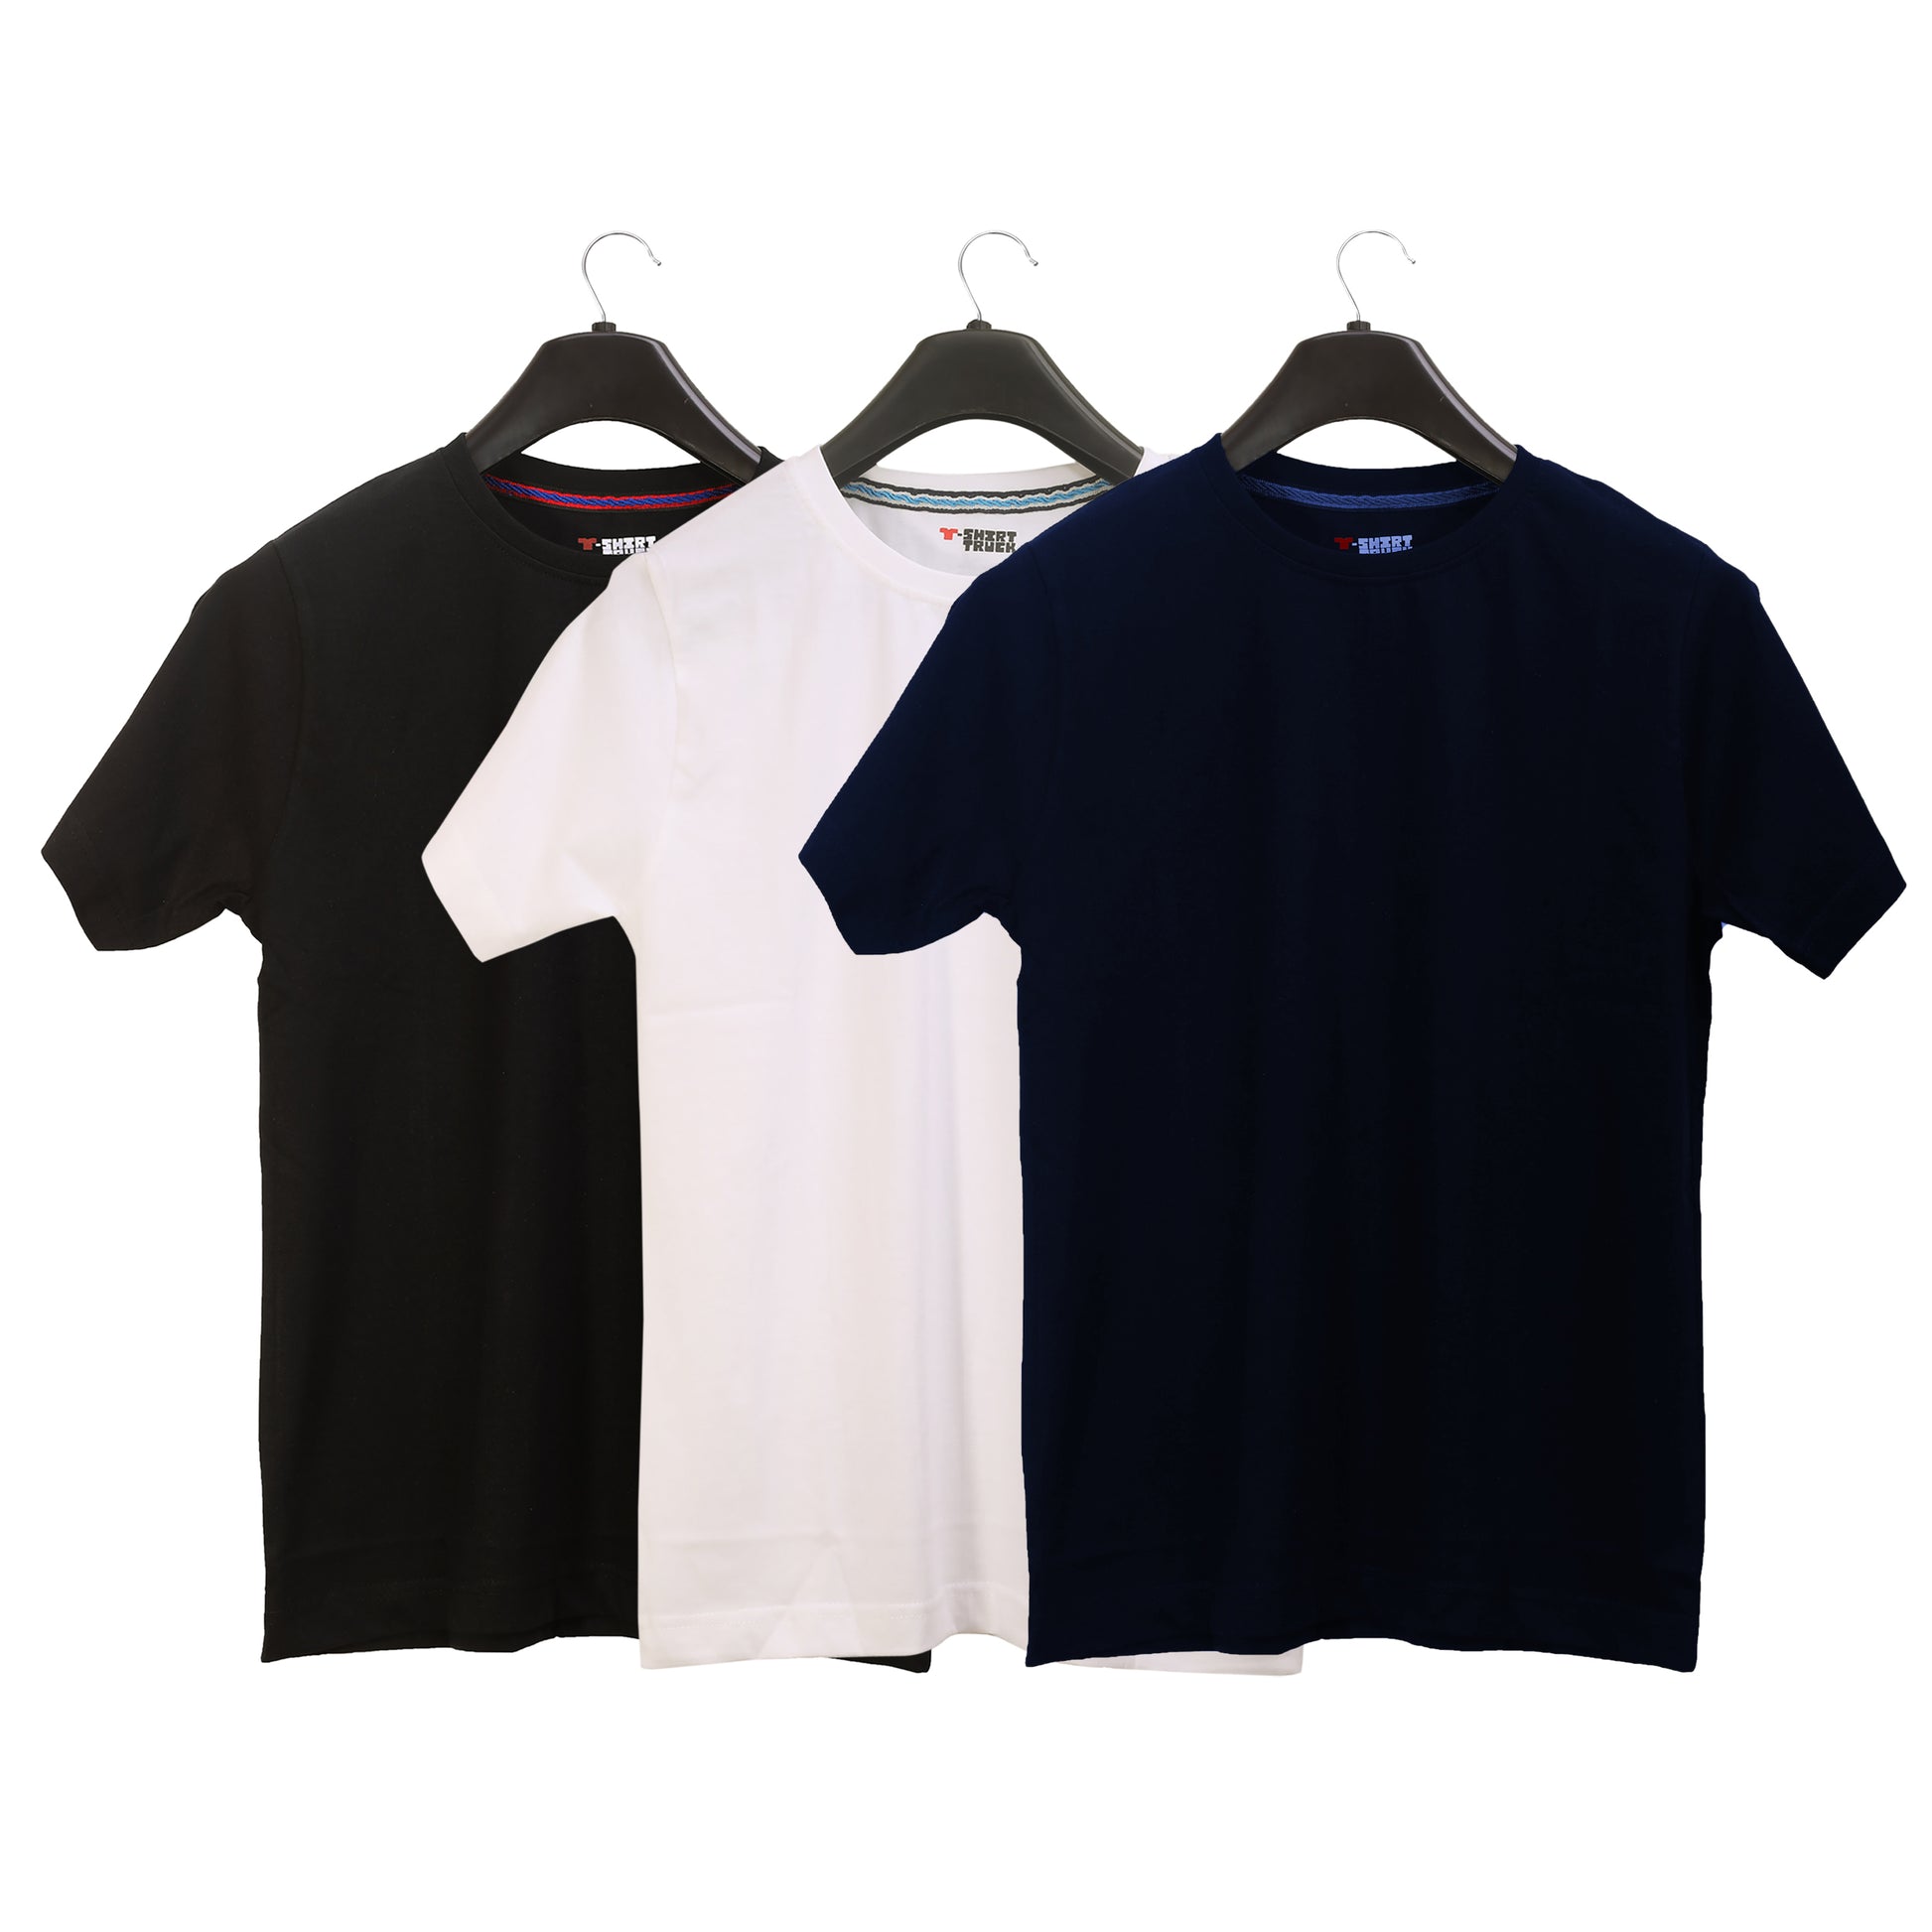 Unisex Round Neck Plain Solid Combo Pack of 3 T-shirts Black, White & Blue